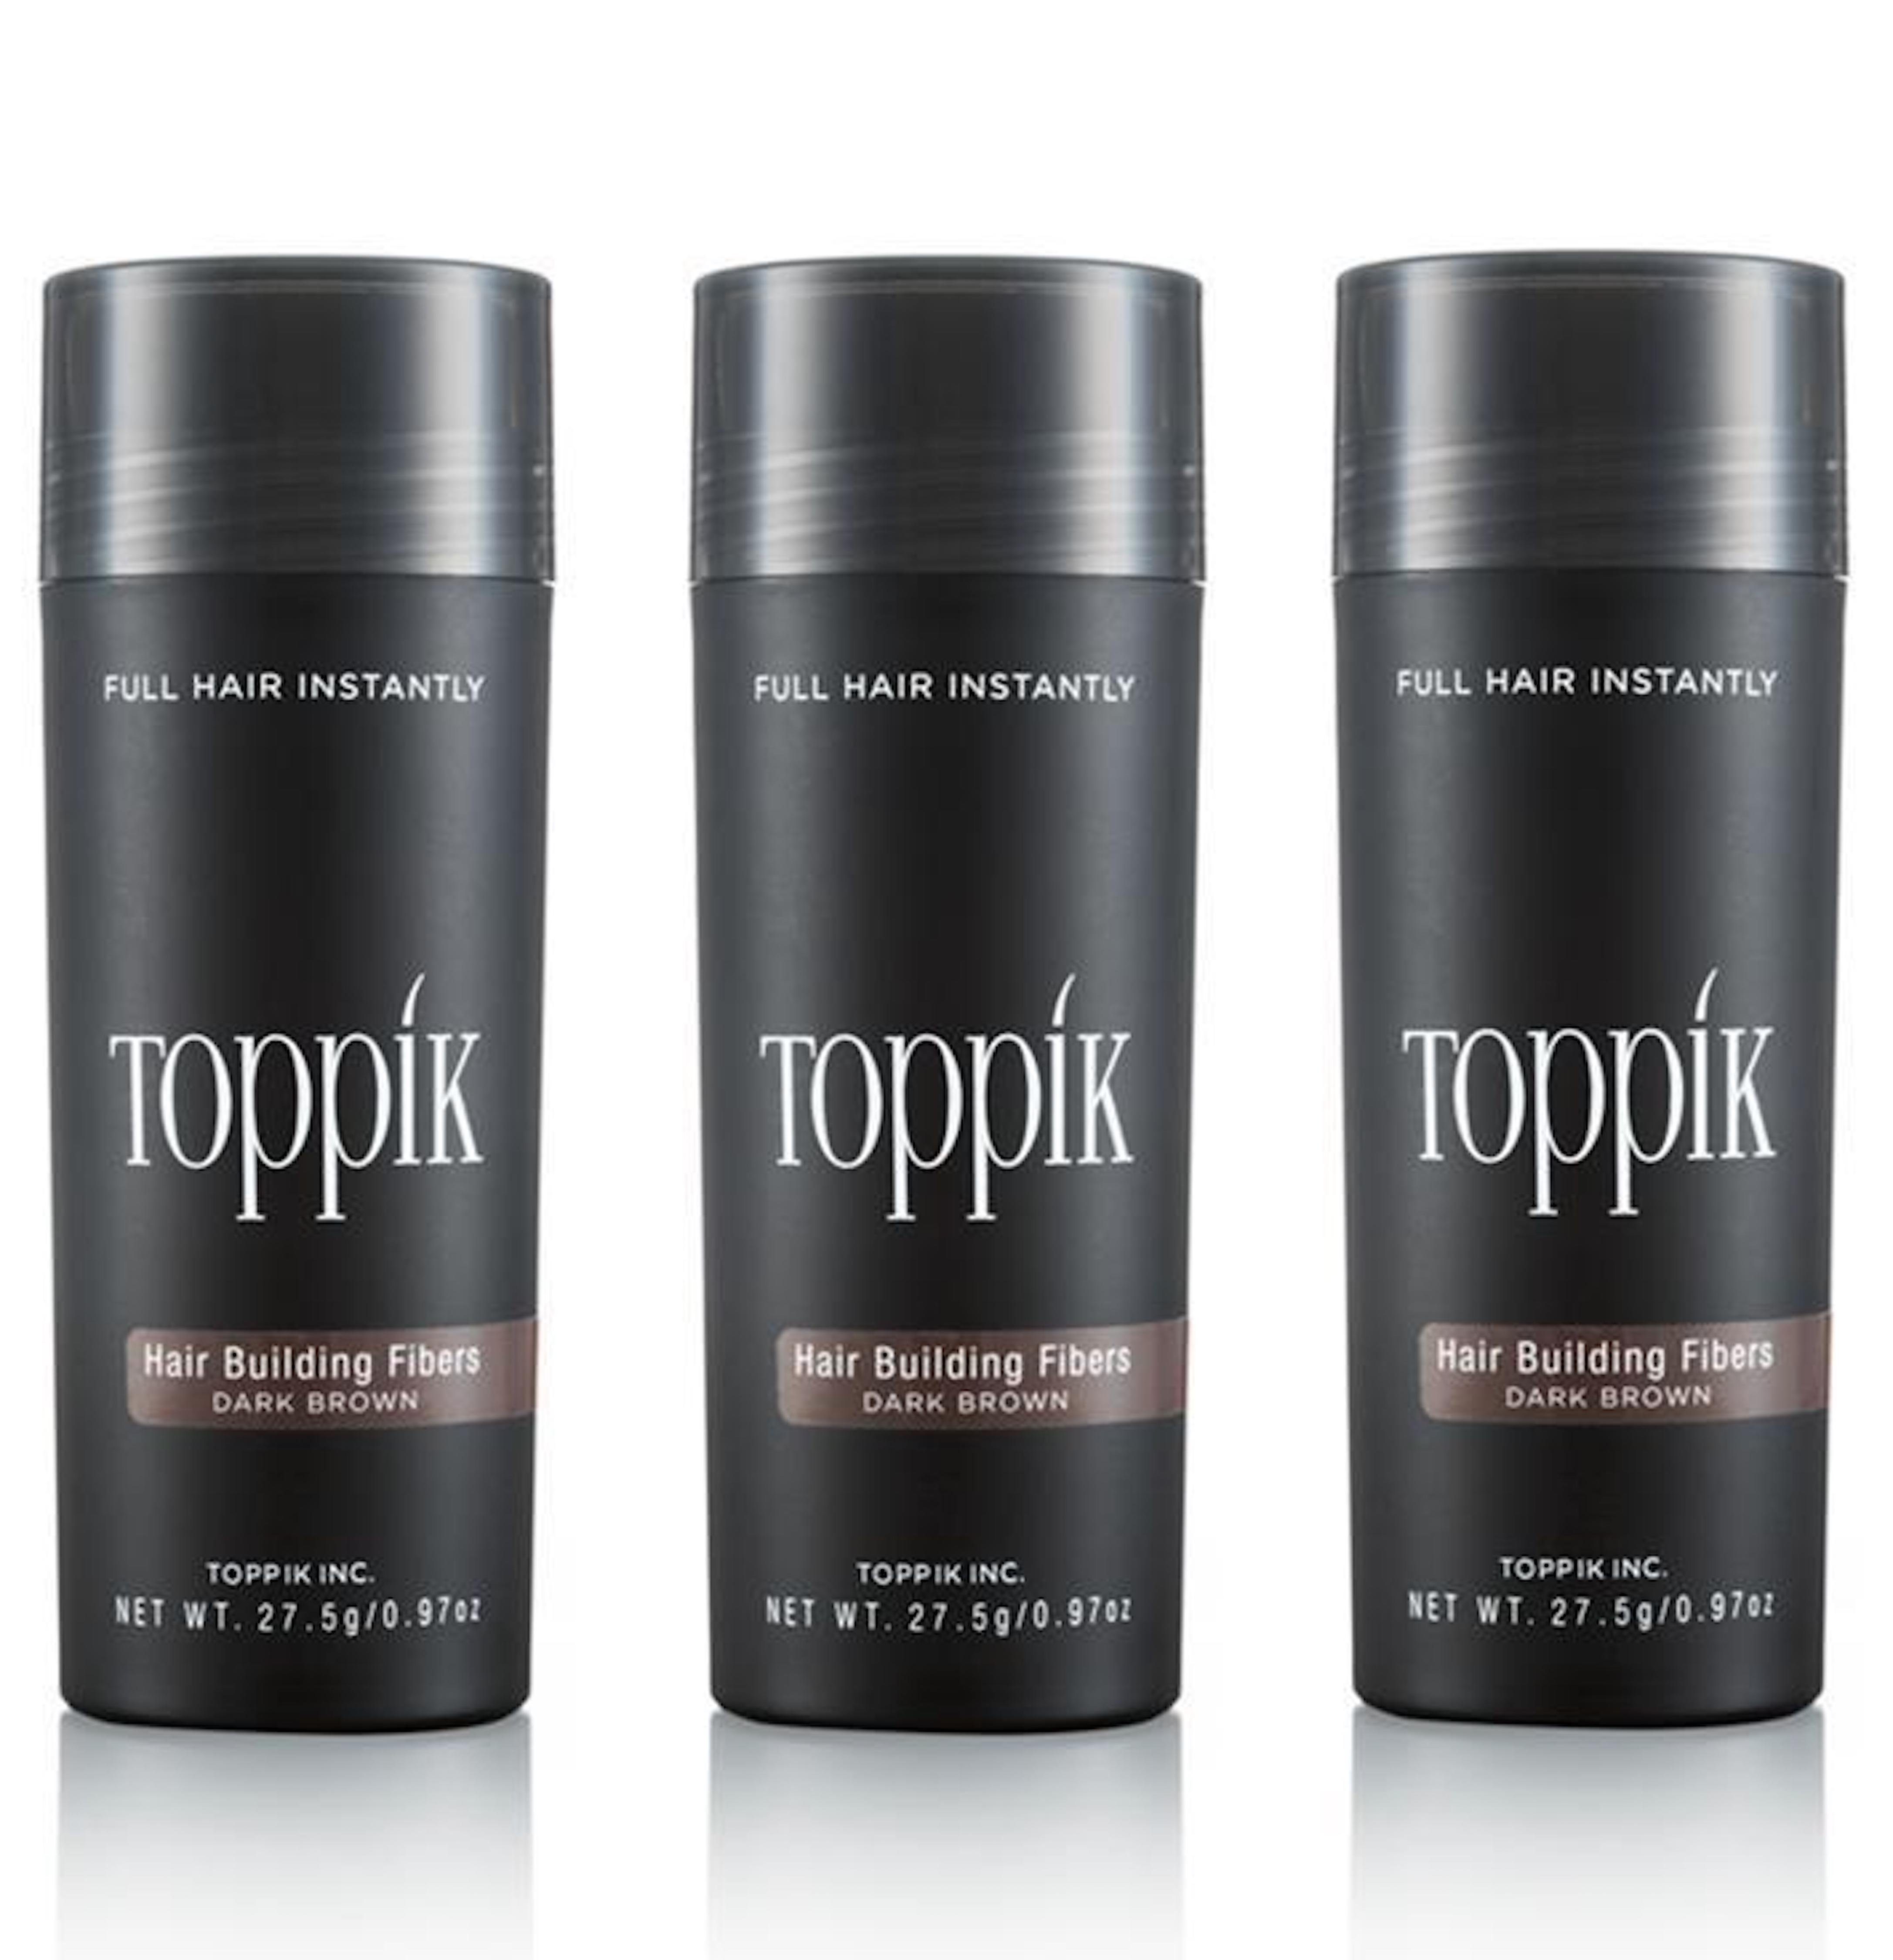 TOPPIK Haarstyling-Set 3 x Für 27,5 Puder, Haarverdichter Mittelbraun mehr Hair Volumen Haar TOPPIK Schütthaar Fibers Microhairs, Streuhaar Haarfasern, g